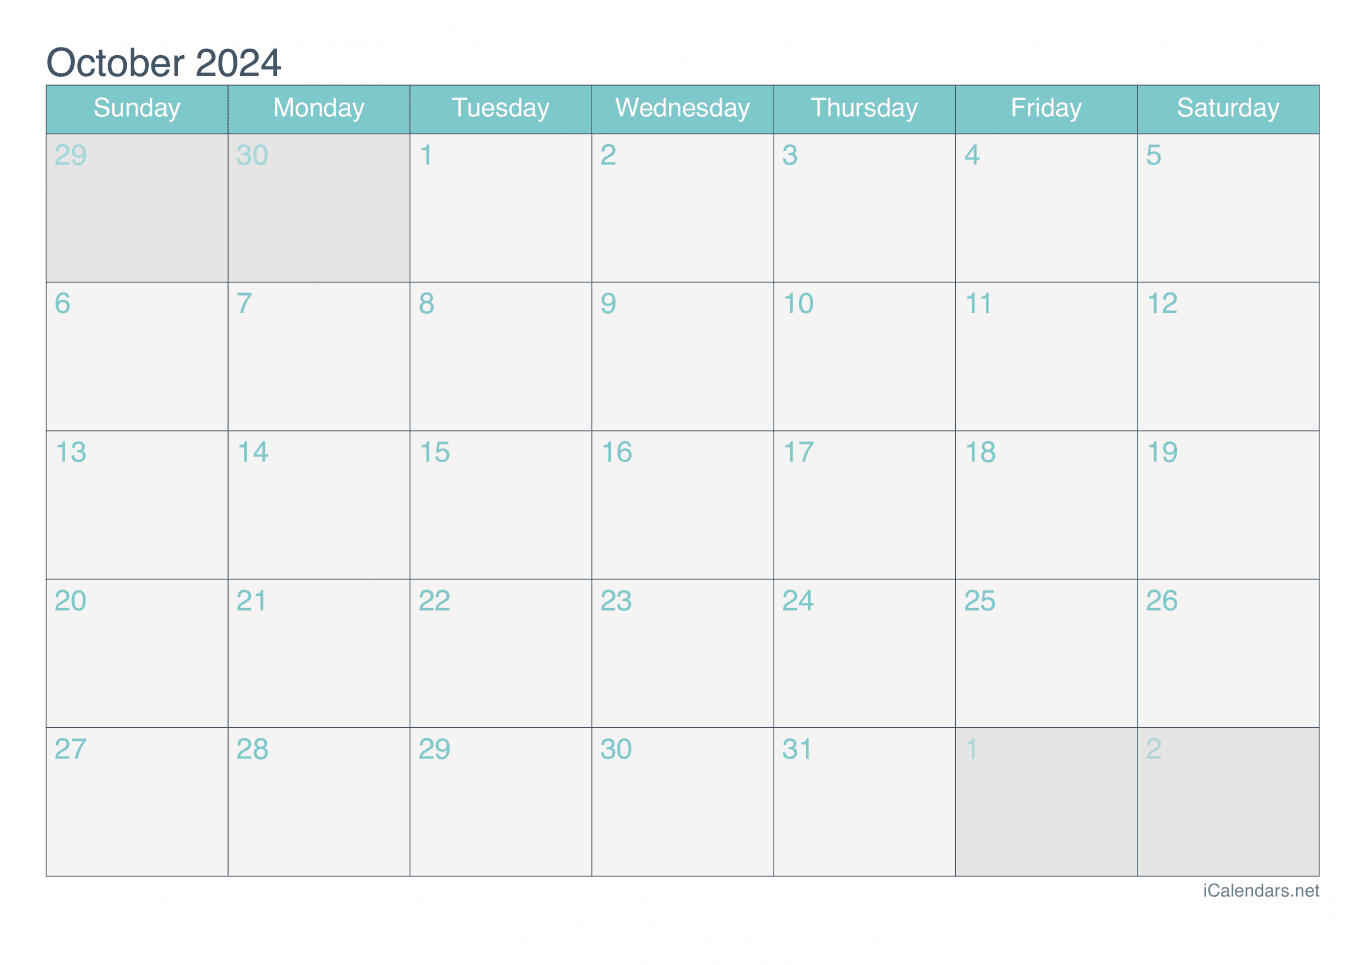 2024 October Calendar - Turquoise